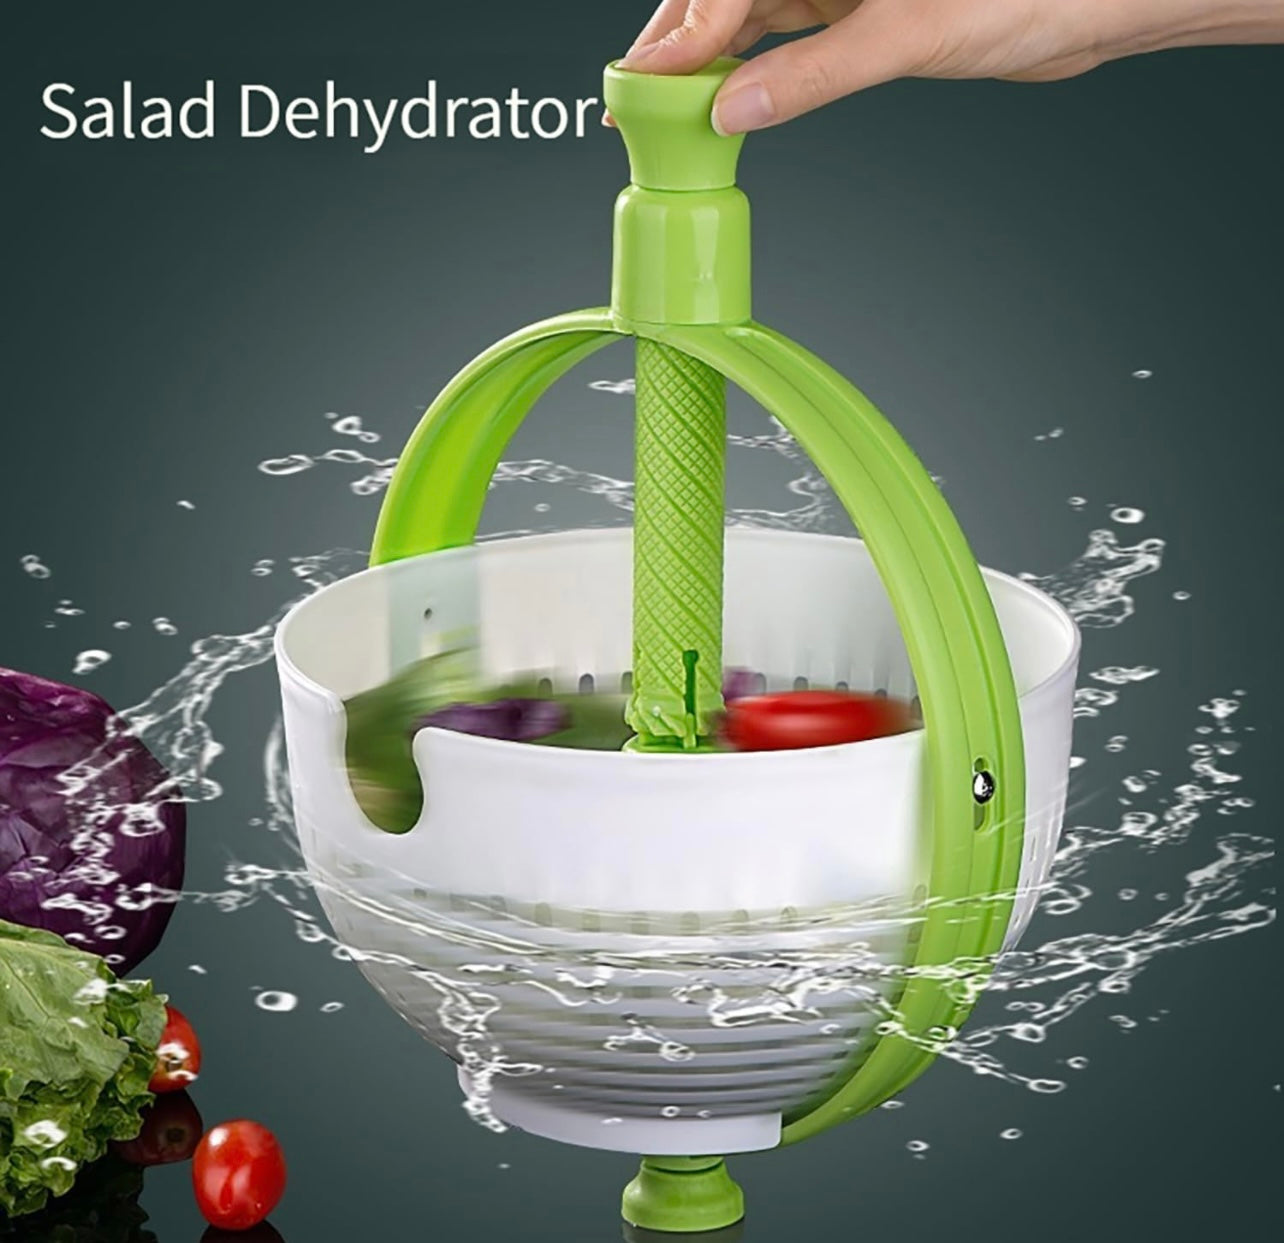 Salad and vegetables spinner